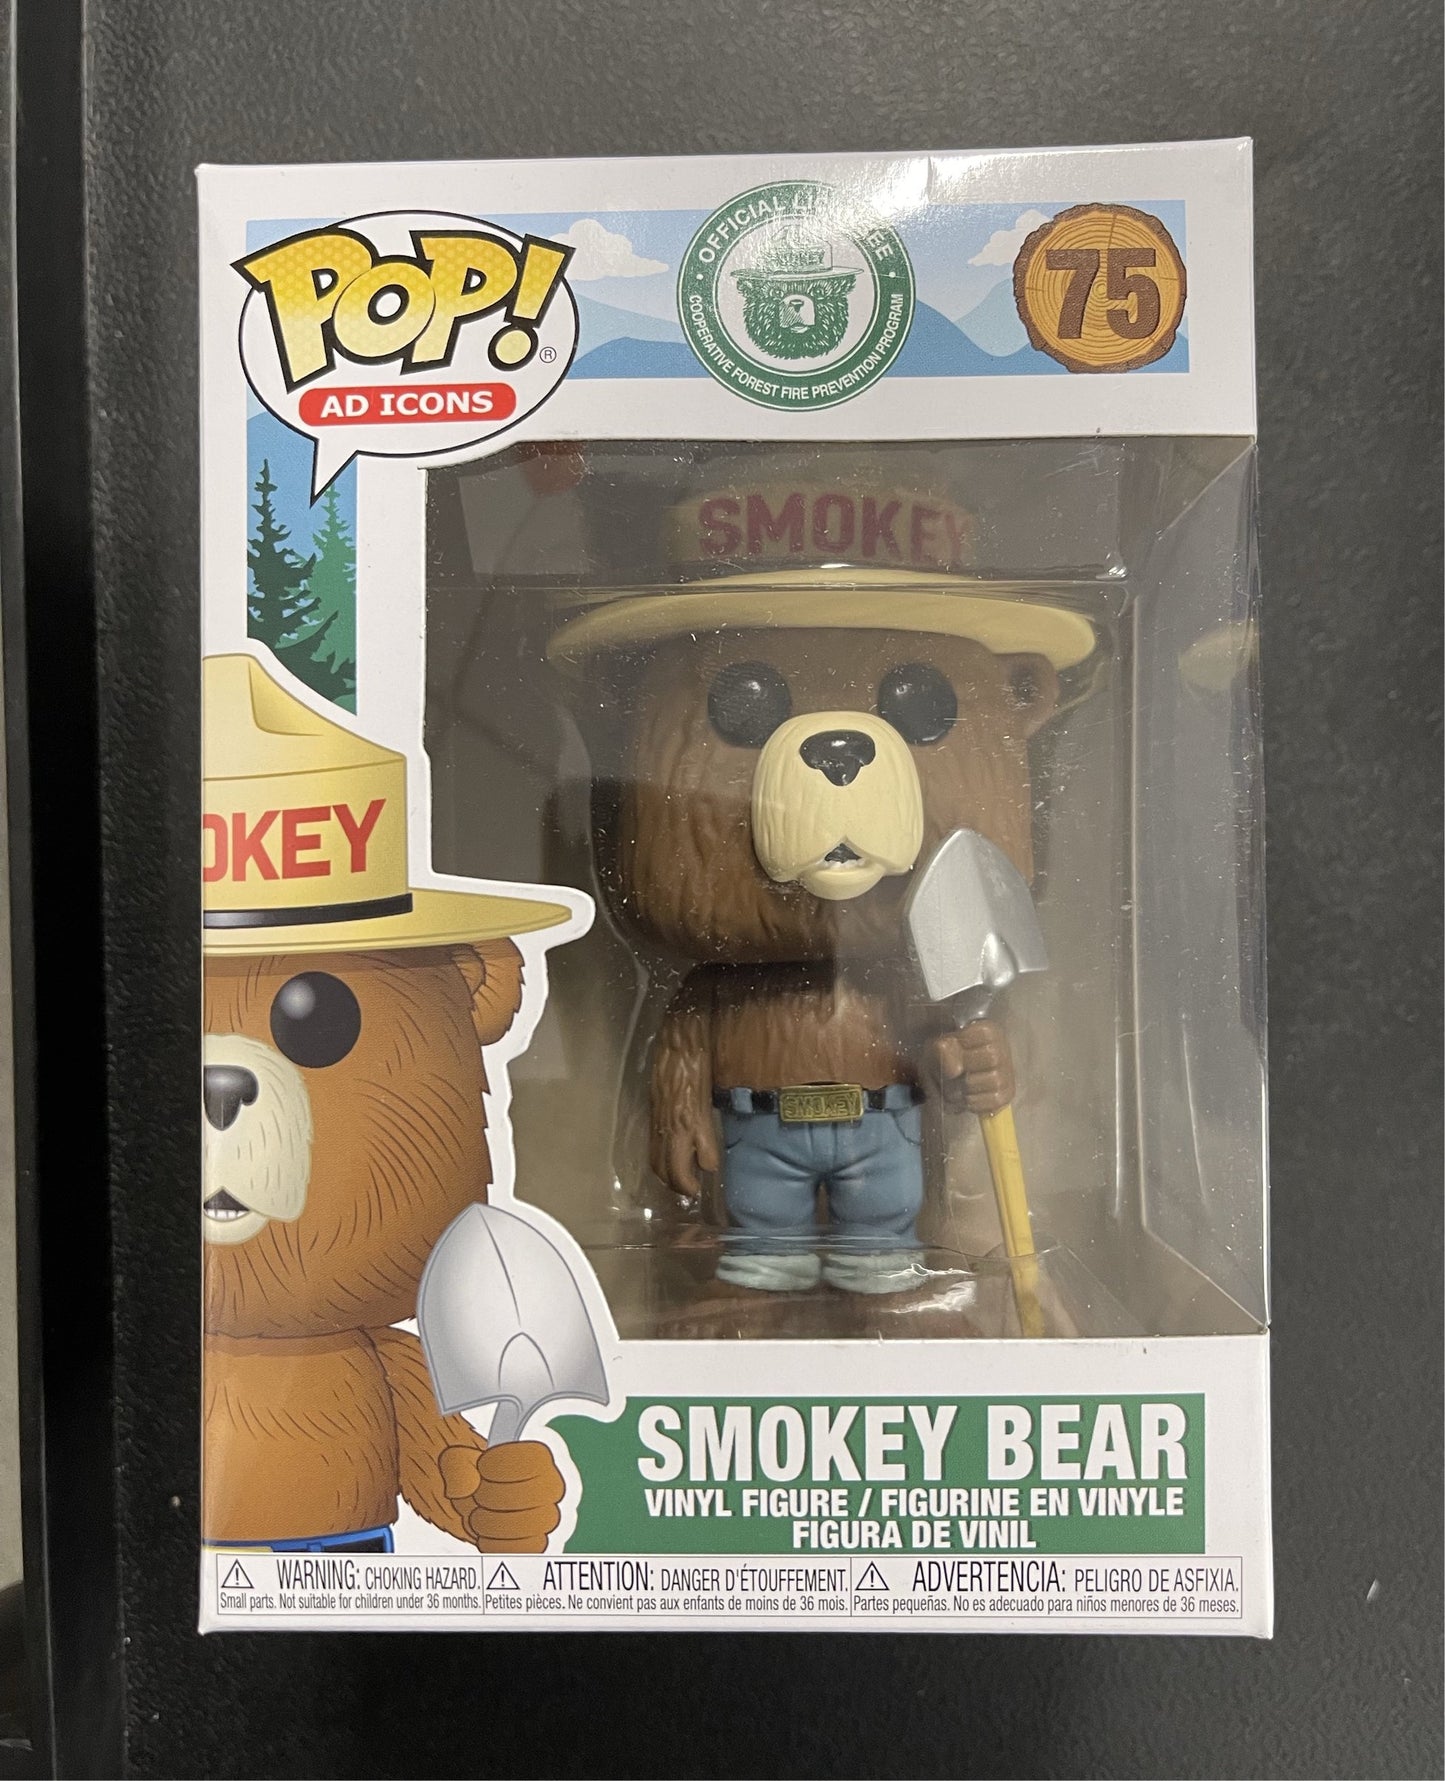 POP! Ad Icons Smokey Bear #75